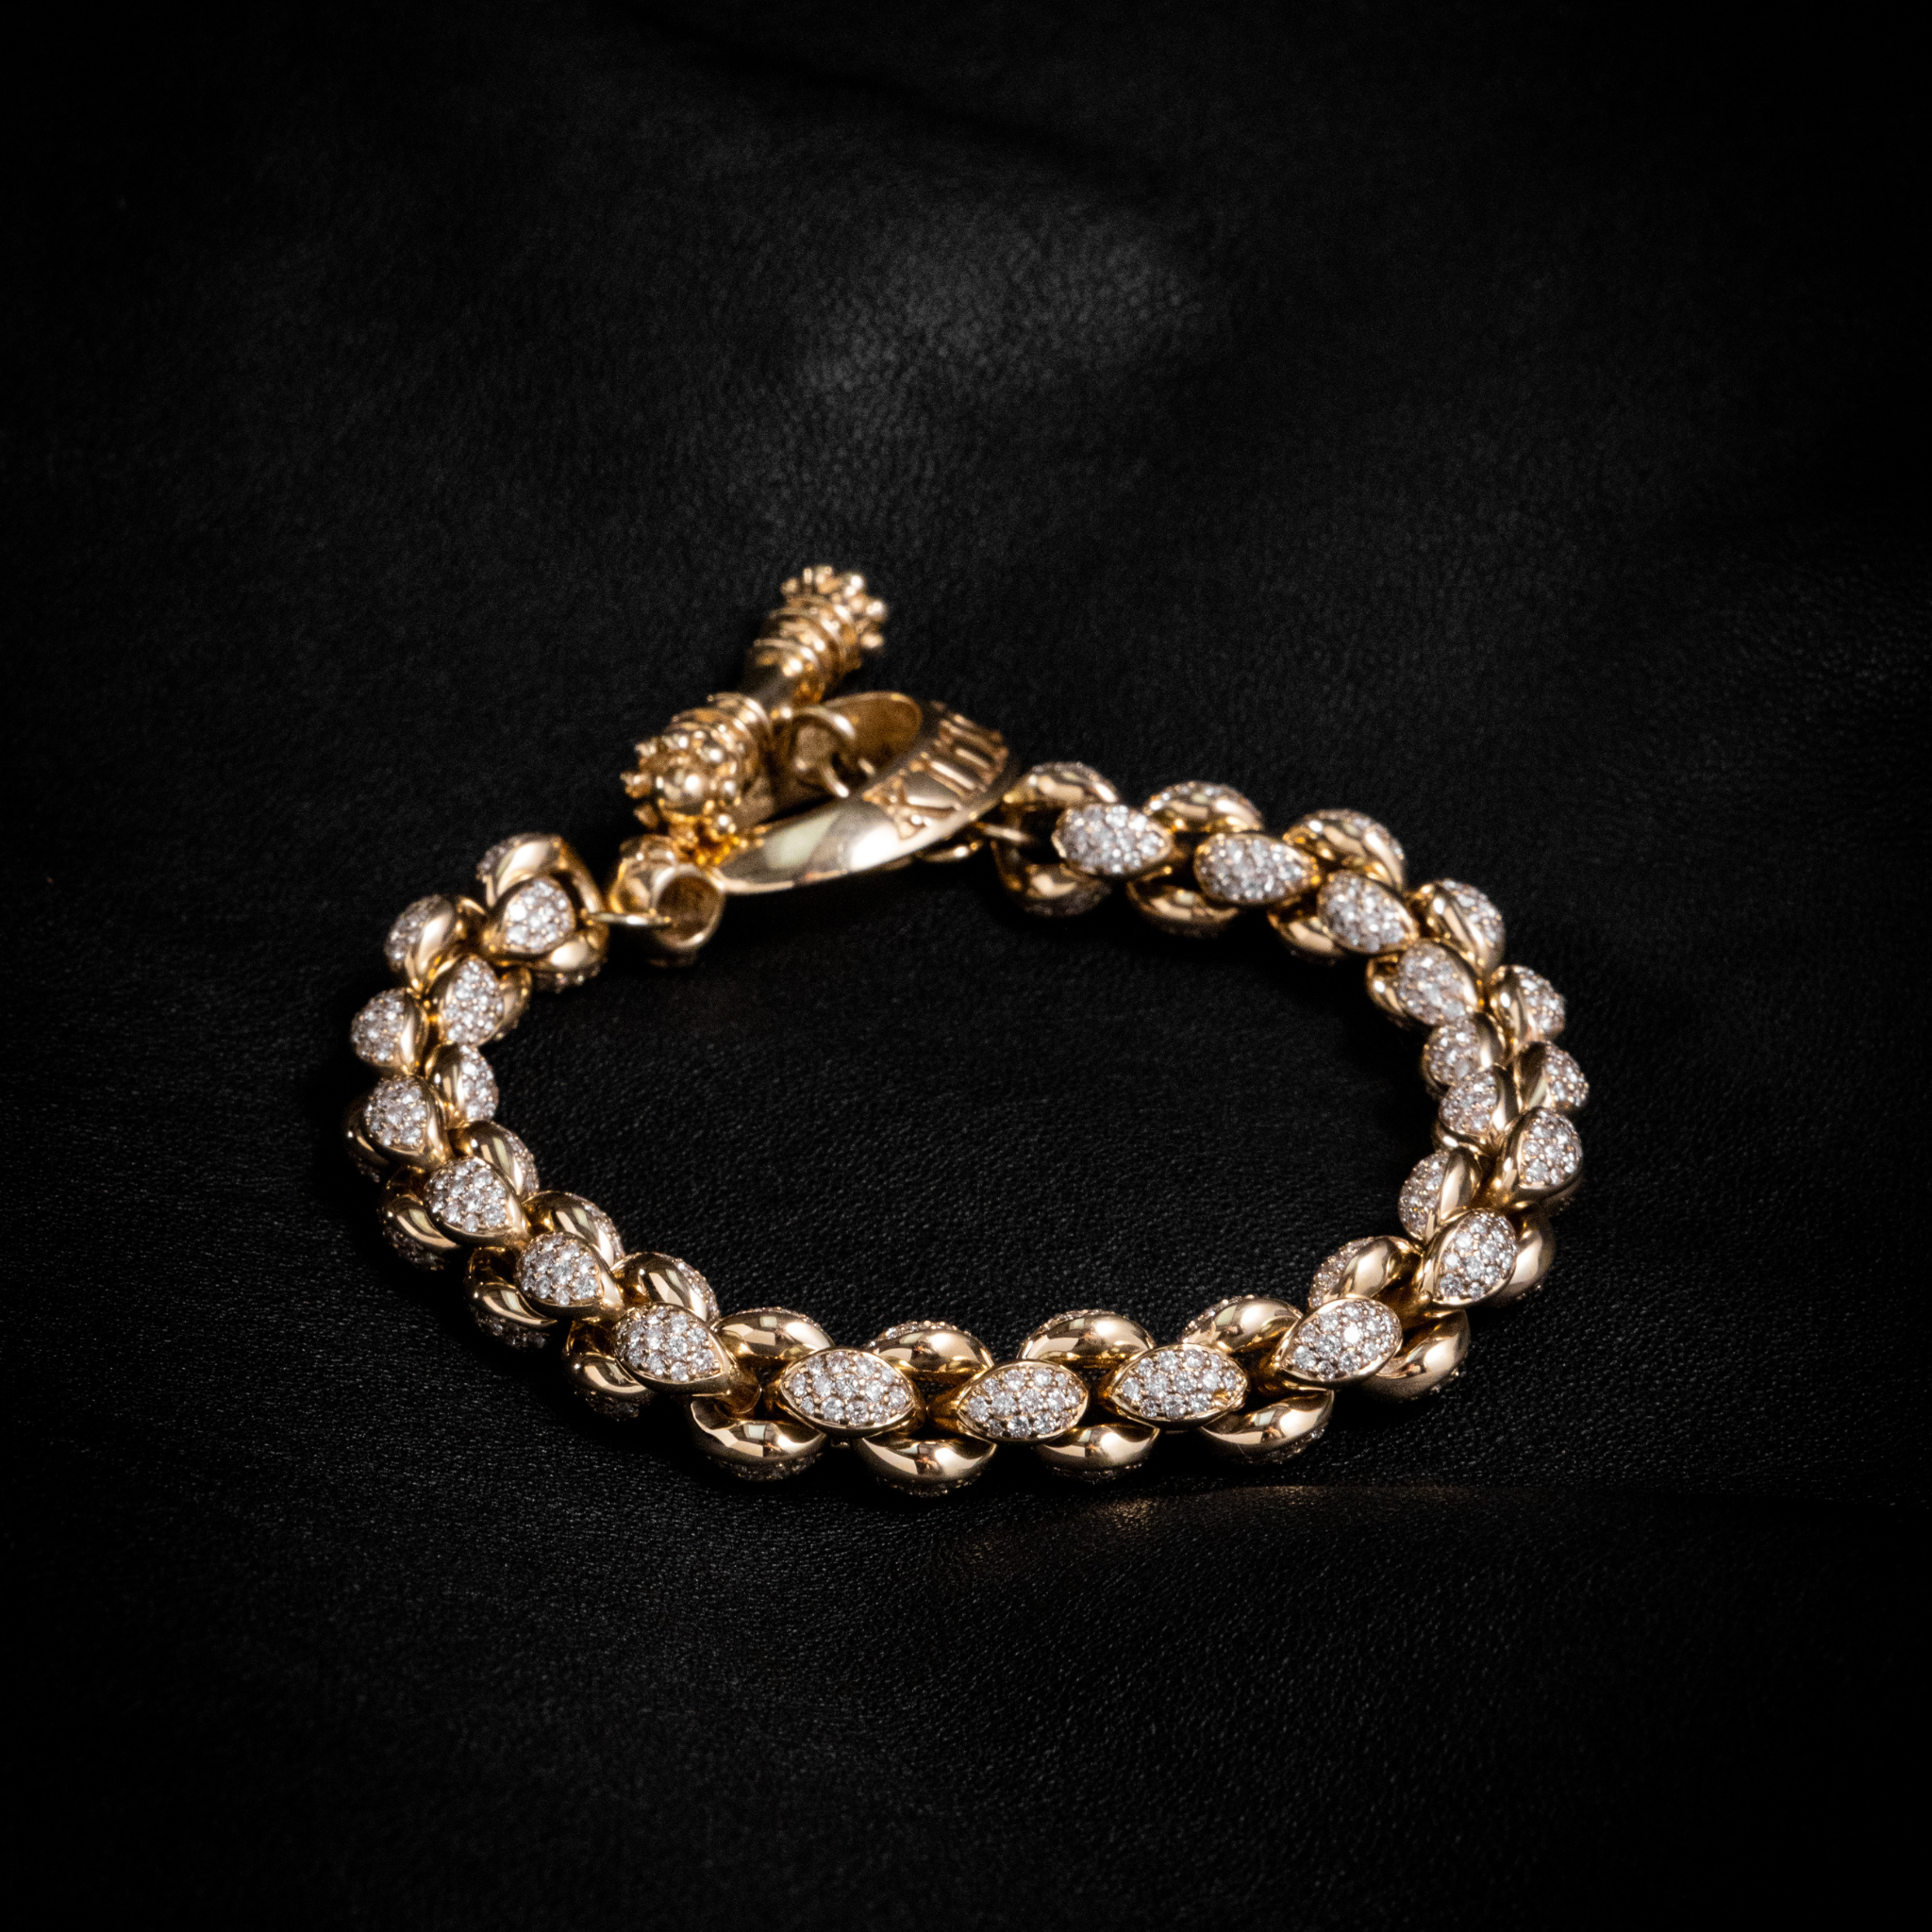 Closed shot of 10k Gold Large Infinity Link Bracelet w/ Pave Diamonds on black background